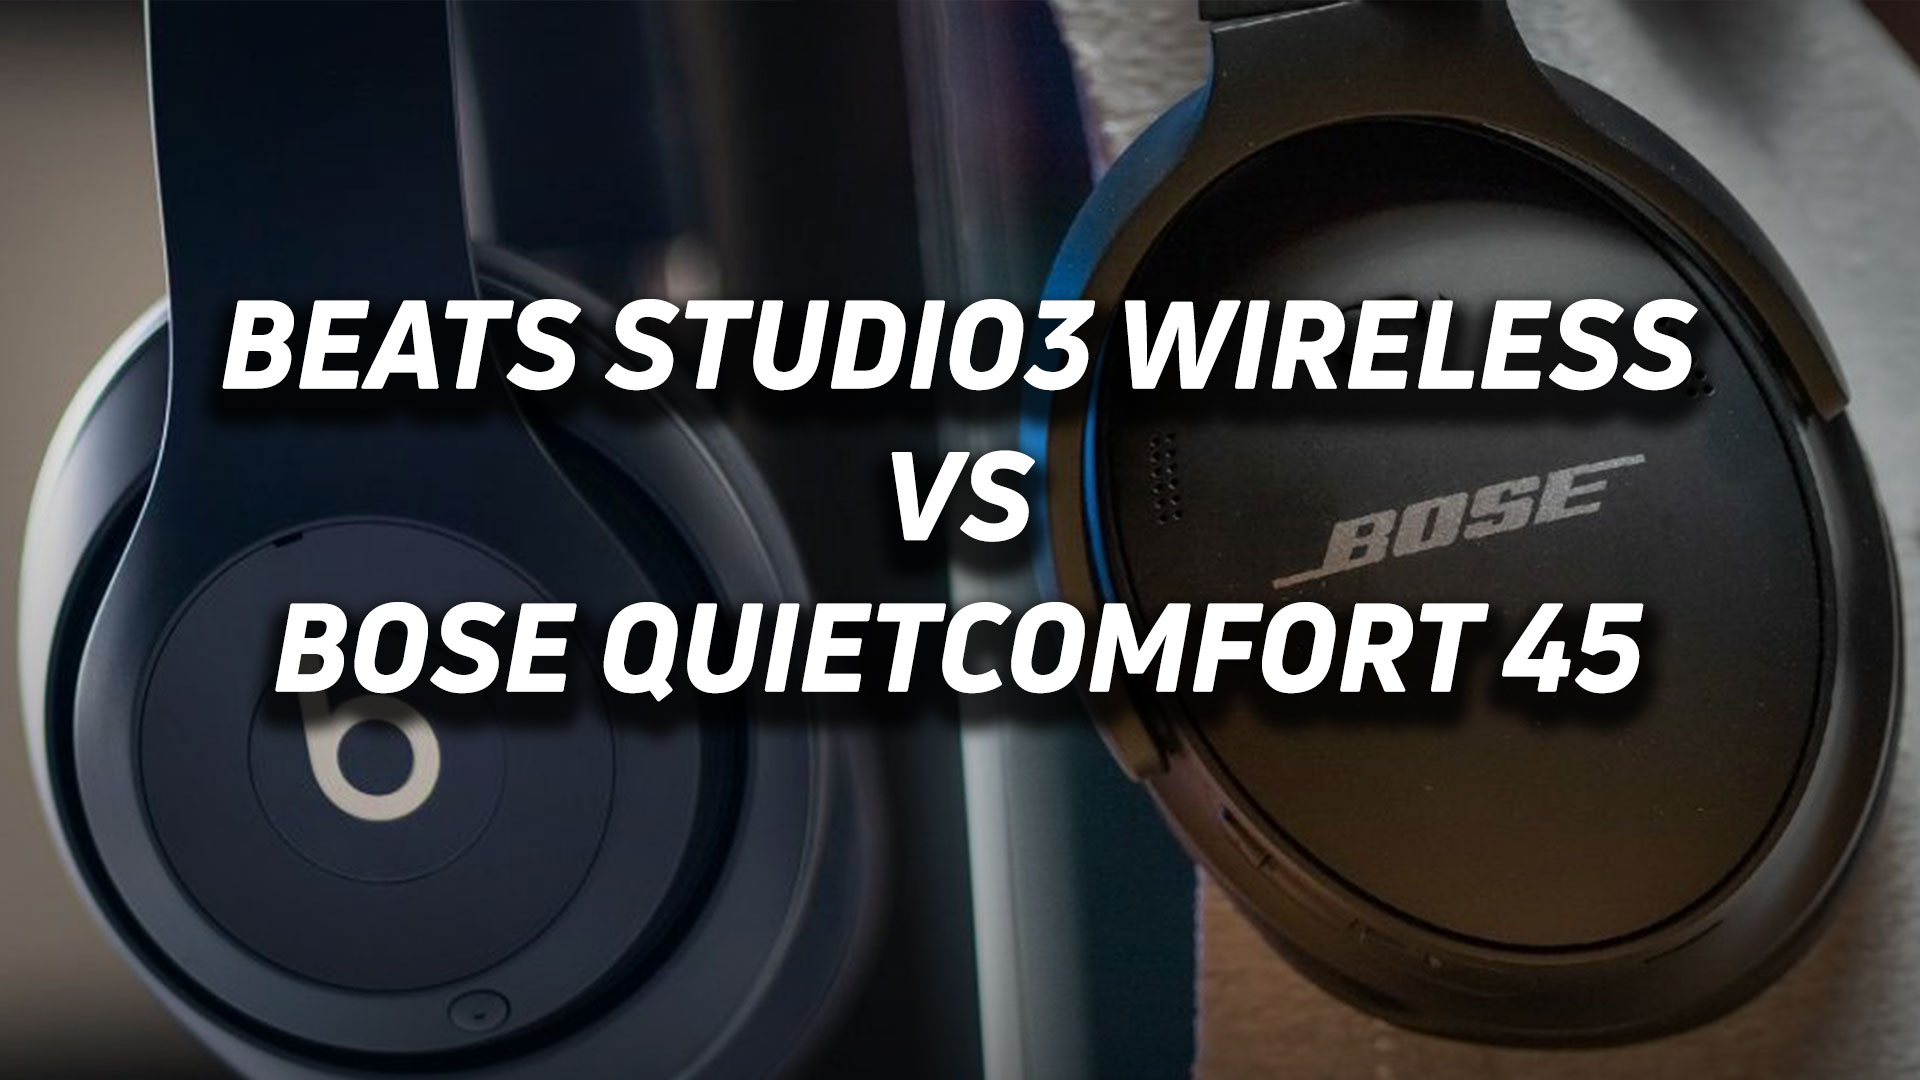 Studio3 - Wireless Beats 45 SoundGuys Bose vs QuietComfort